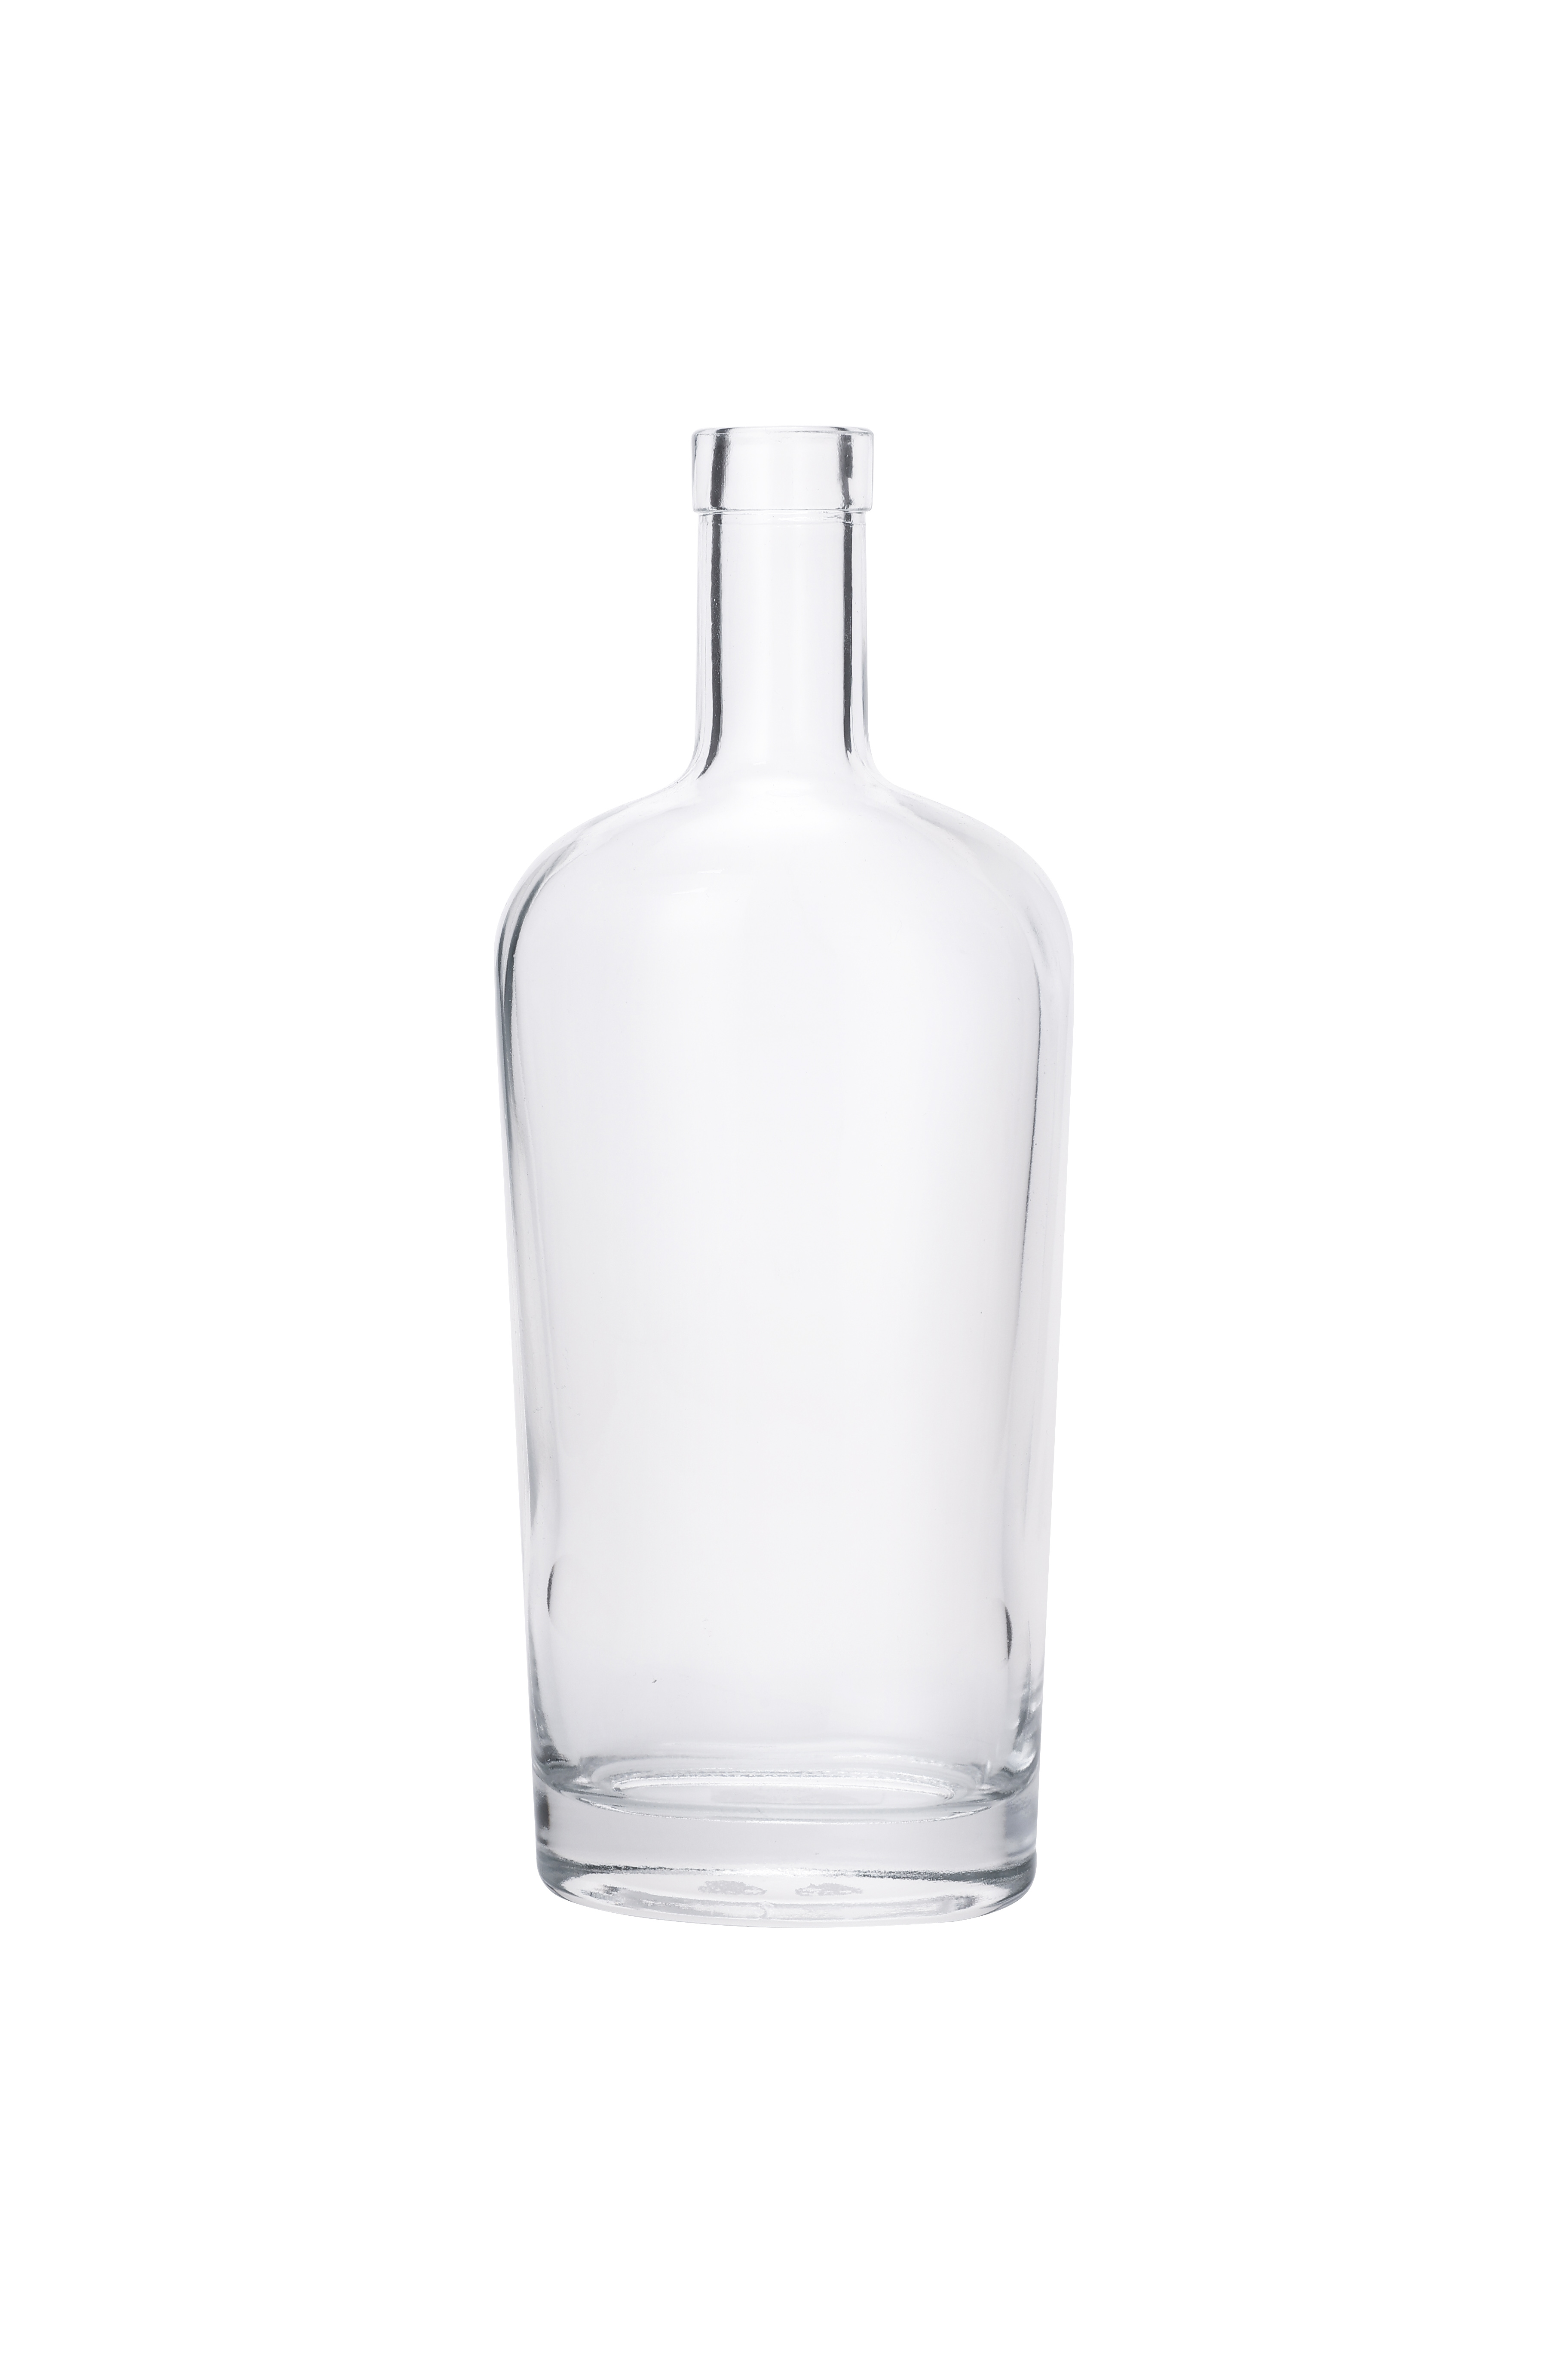 Wholesale 50ml 100ml 200ml 375ml 500ml Spirits Vodka Gin Liquor Glass Bottle with Cork Or Screw Cap for Sale